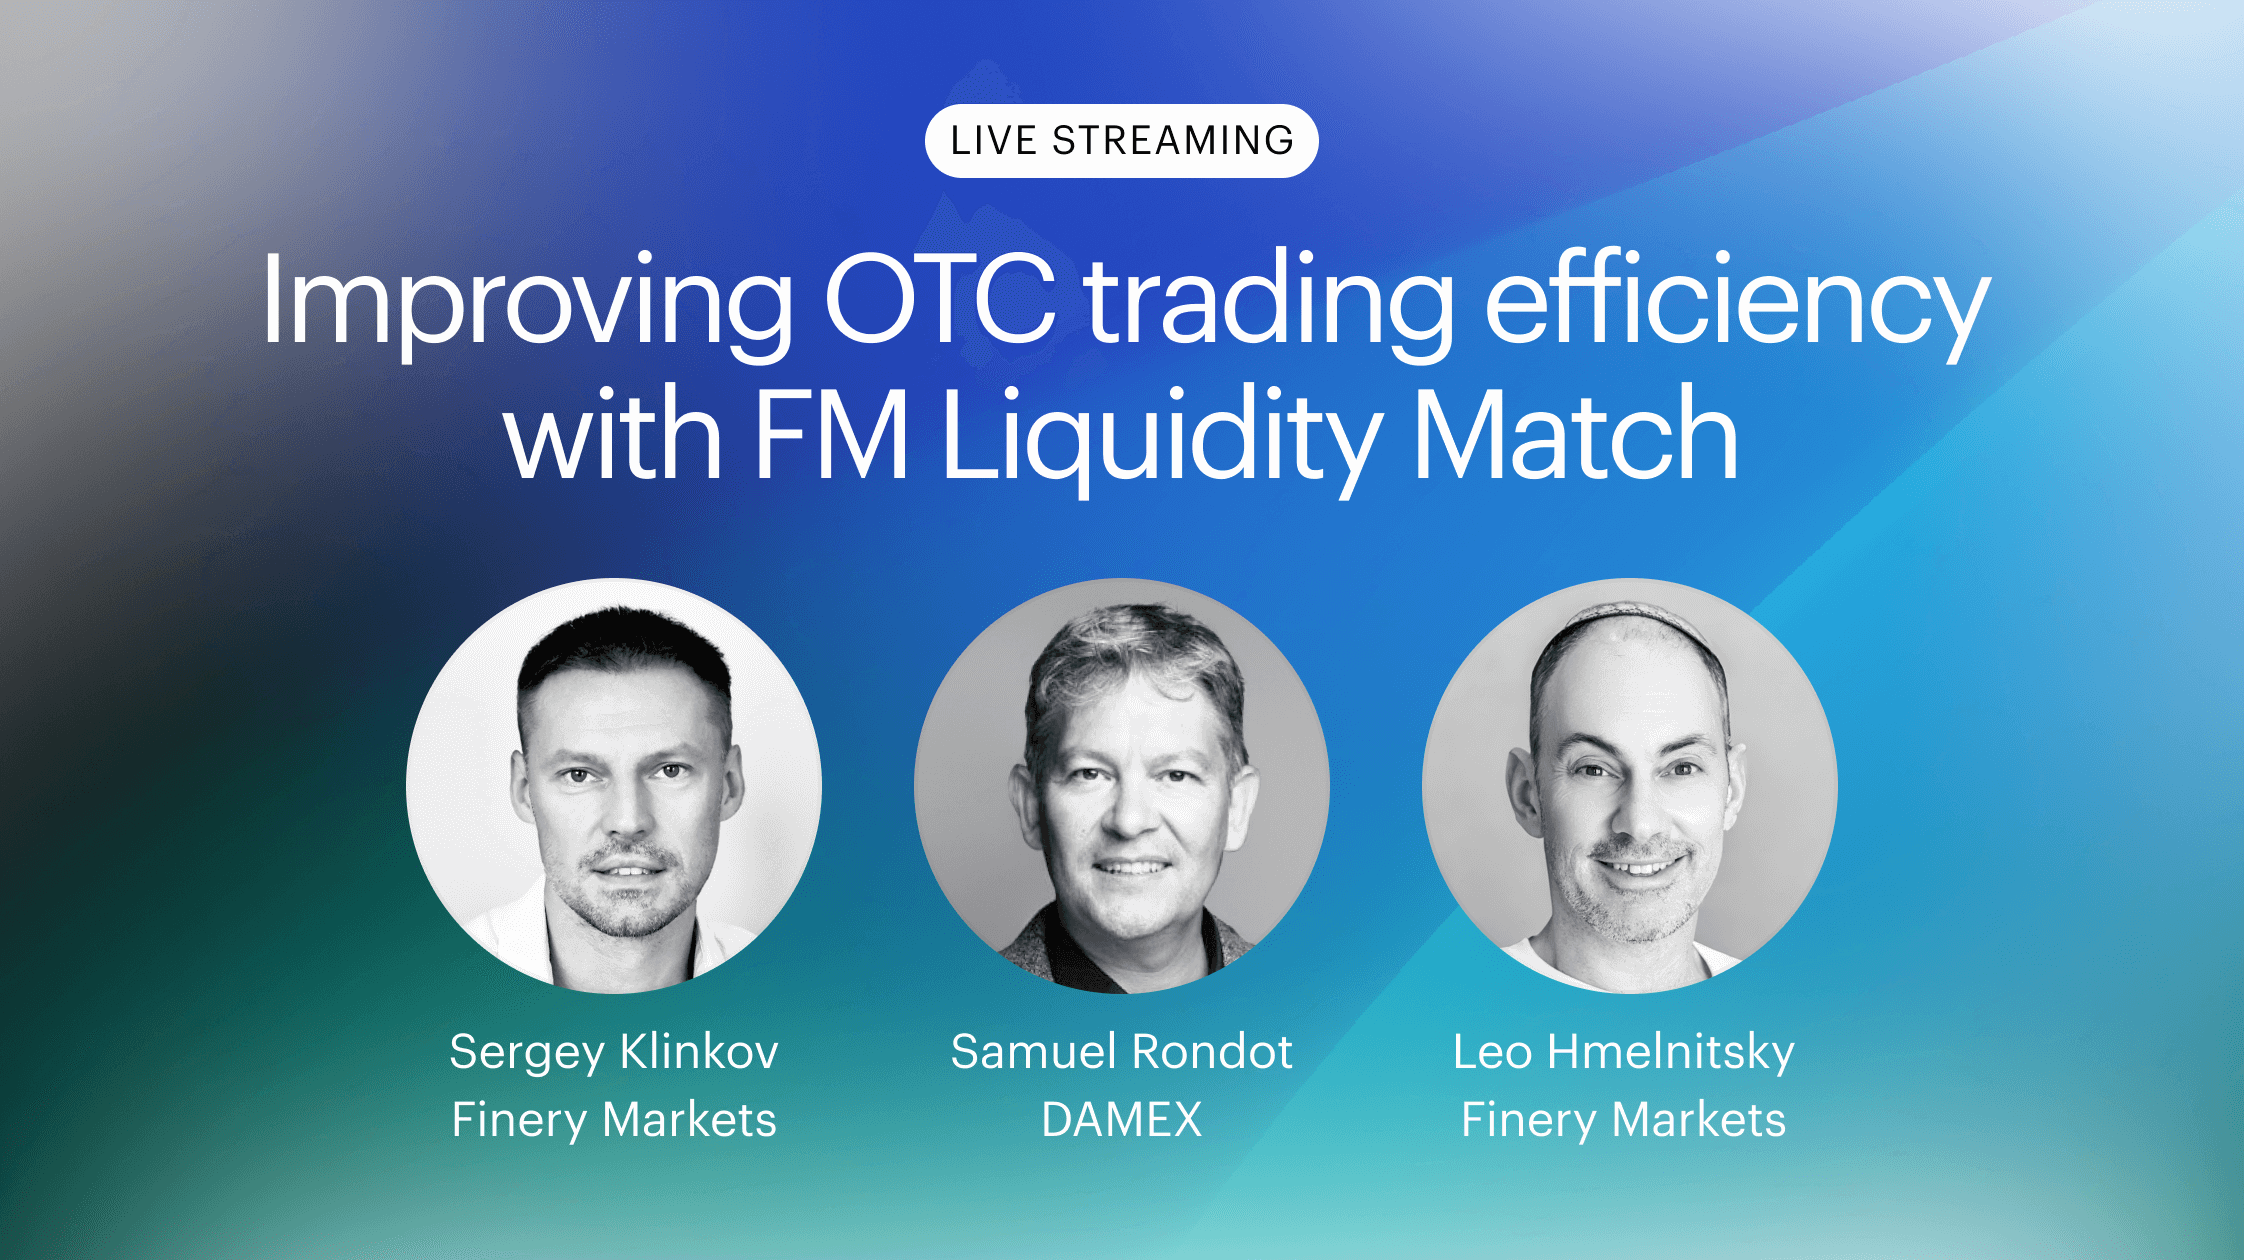 Livestream highlights: improving OTC trading efficiency with FM Liquidity Match